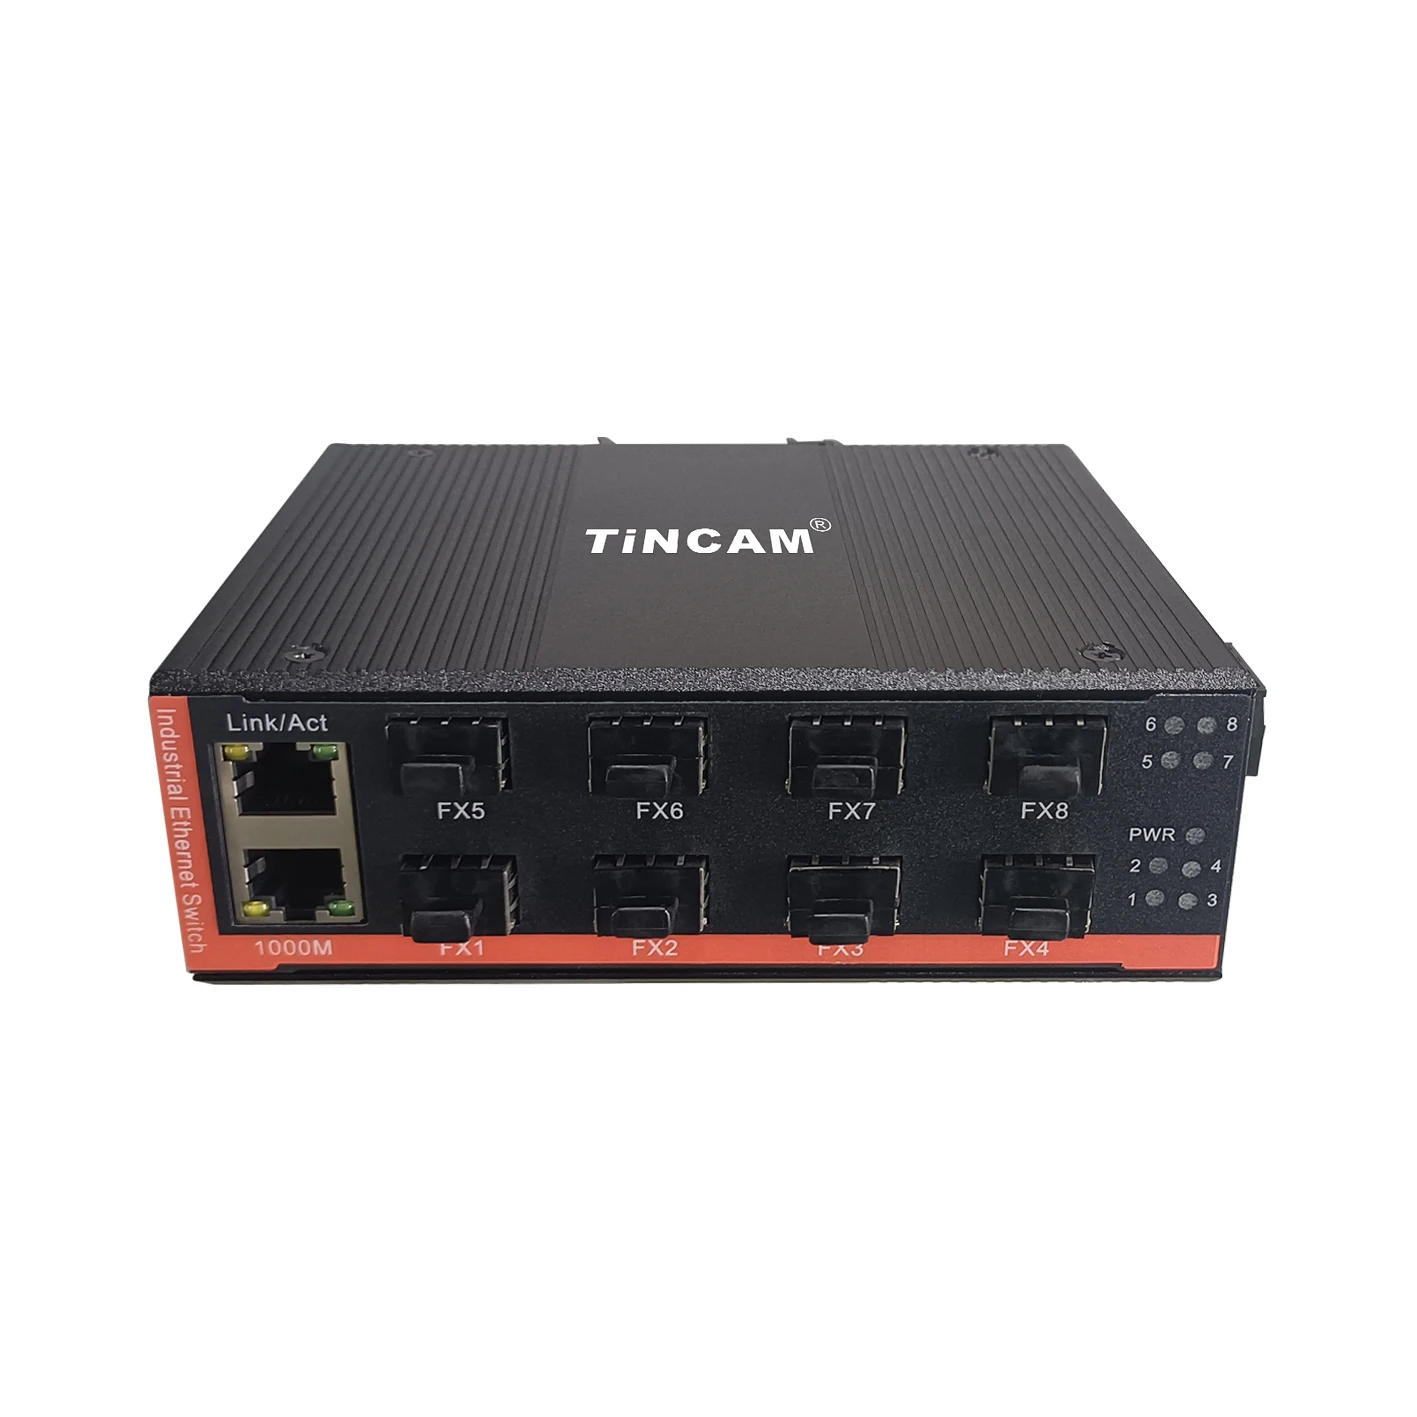 TiNCAM Gigabit 10Port Access 8*SFP+2*RJ45 Industrial Network Switch Aggregation Industrial Media Converter коммутатор ubiquiti usw aggregation